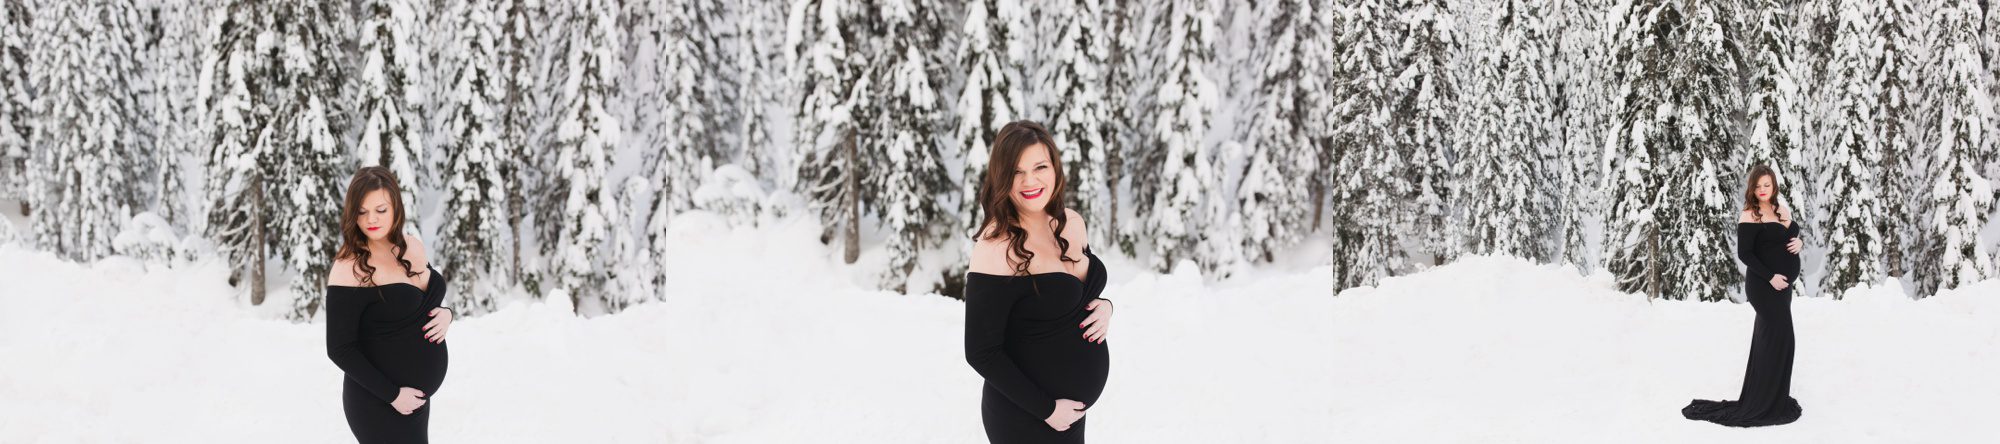 Seattle maternity photographer | maternity photography seattle